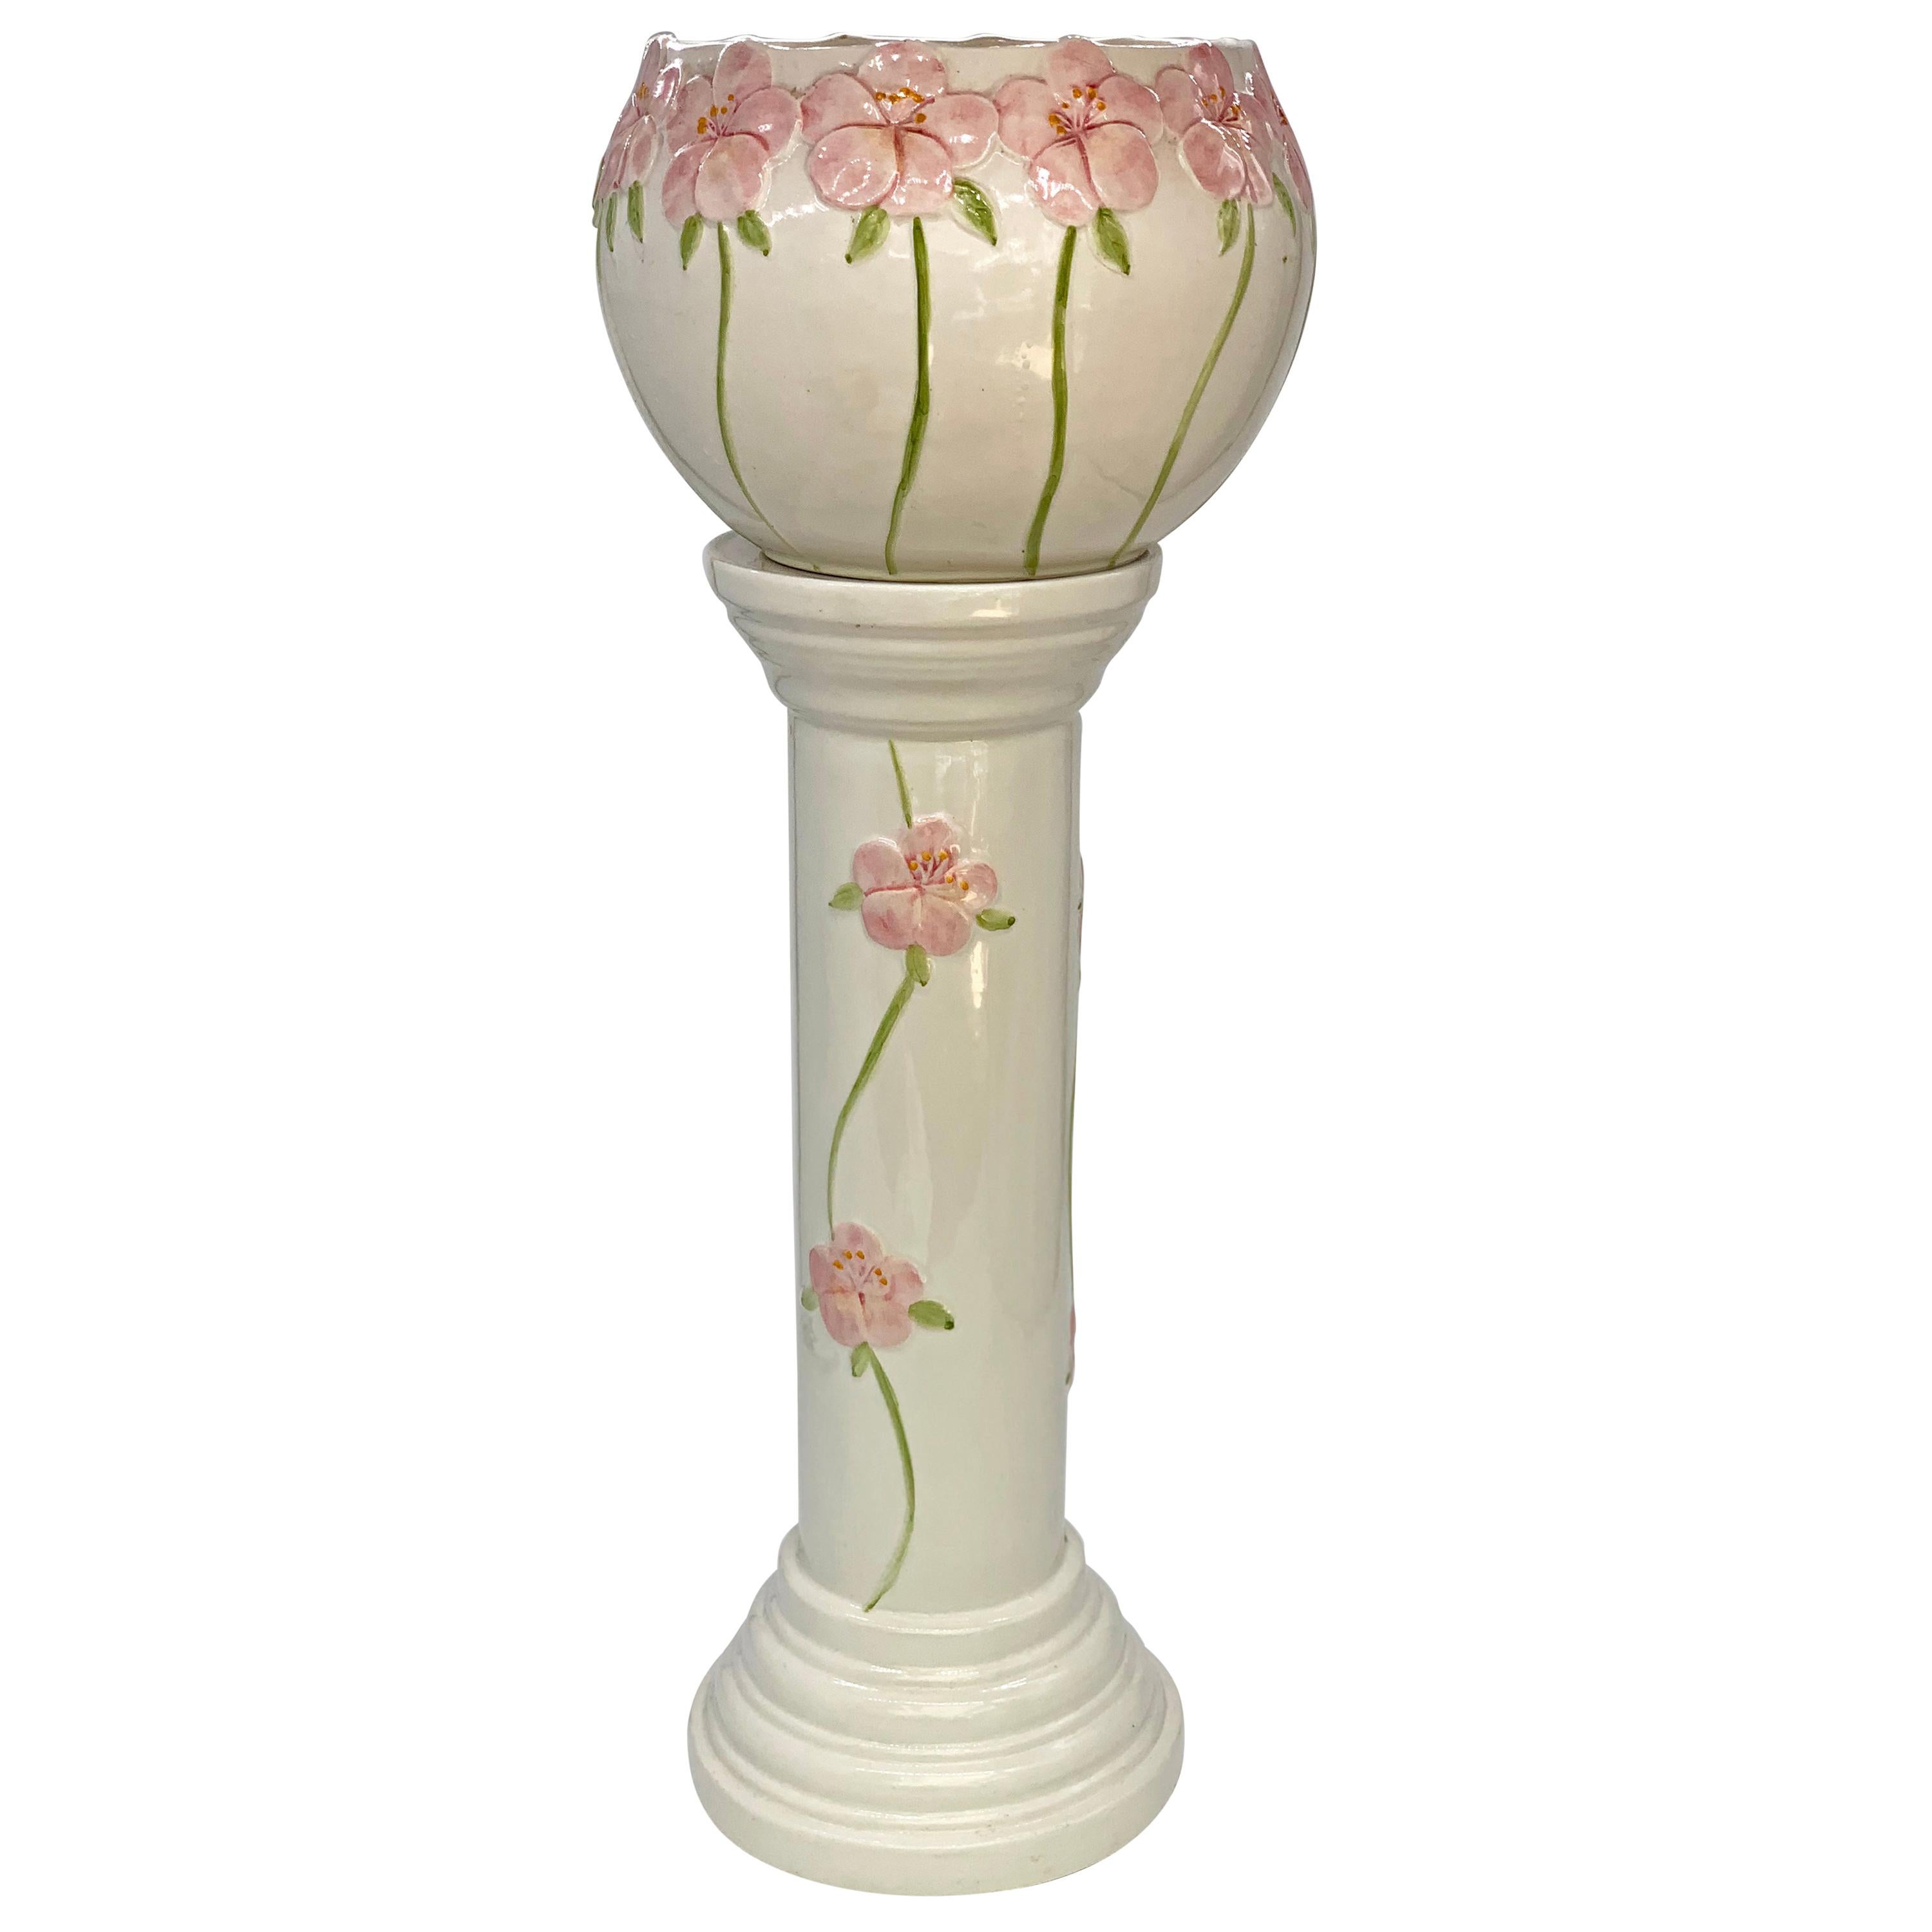 Decorative 20th Century White Porcelain Jardinière/ Flower Pot with Pink Flowers For Sale